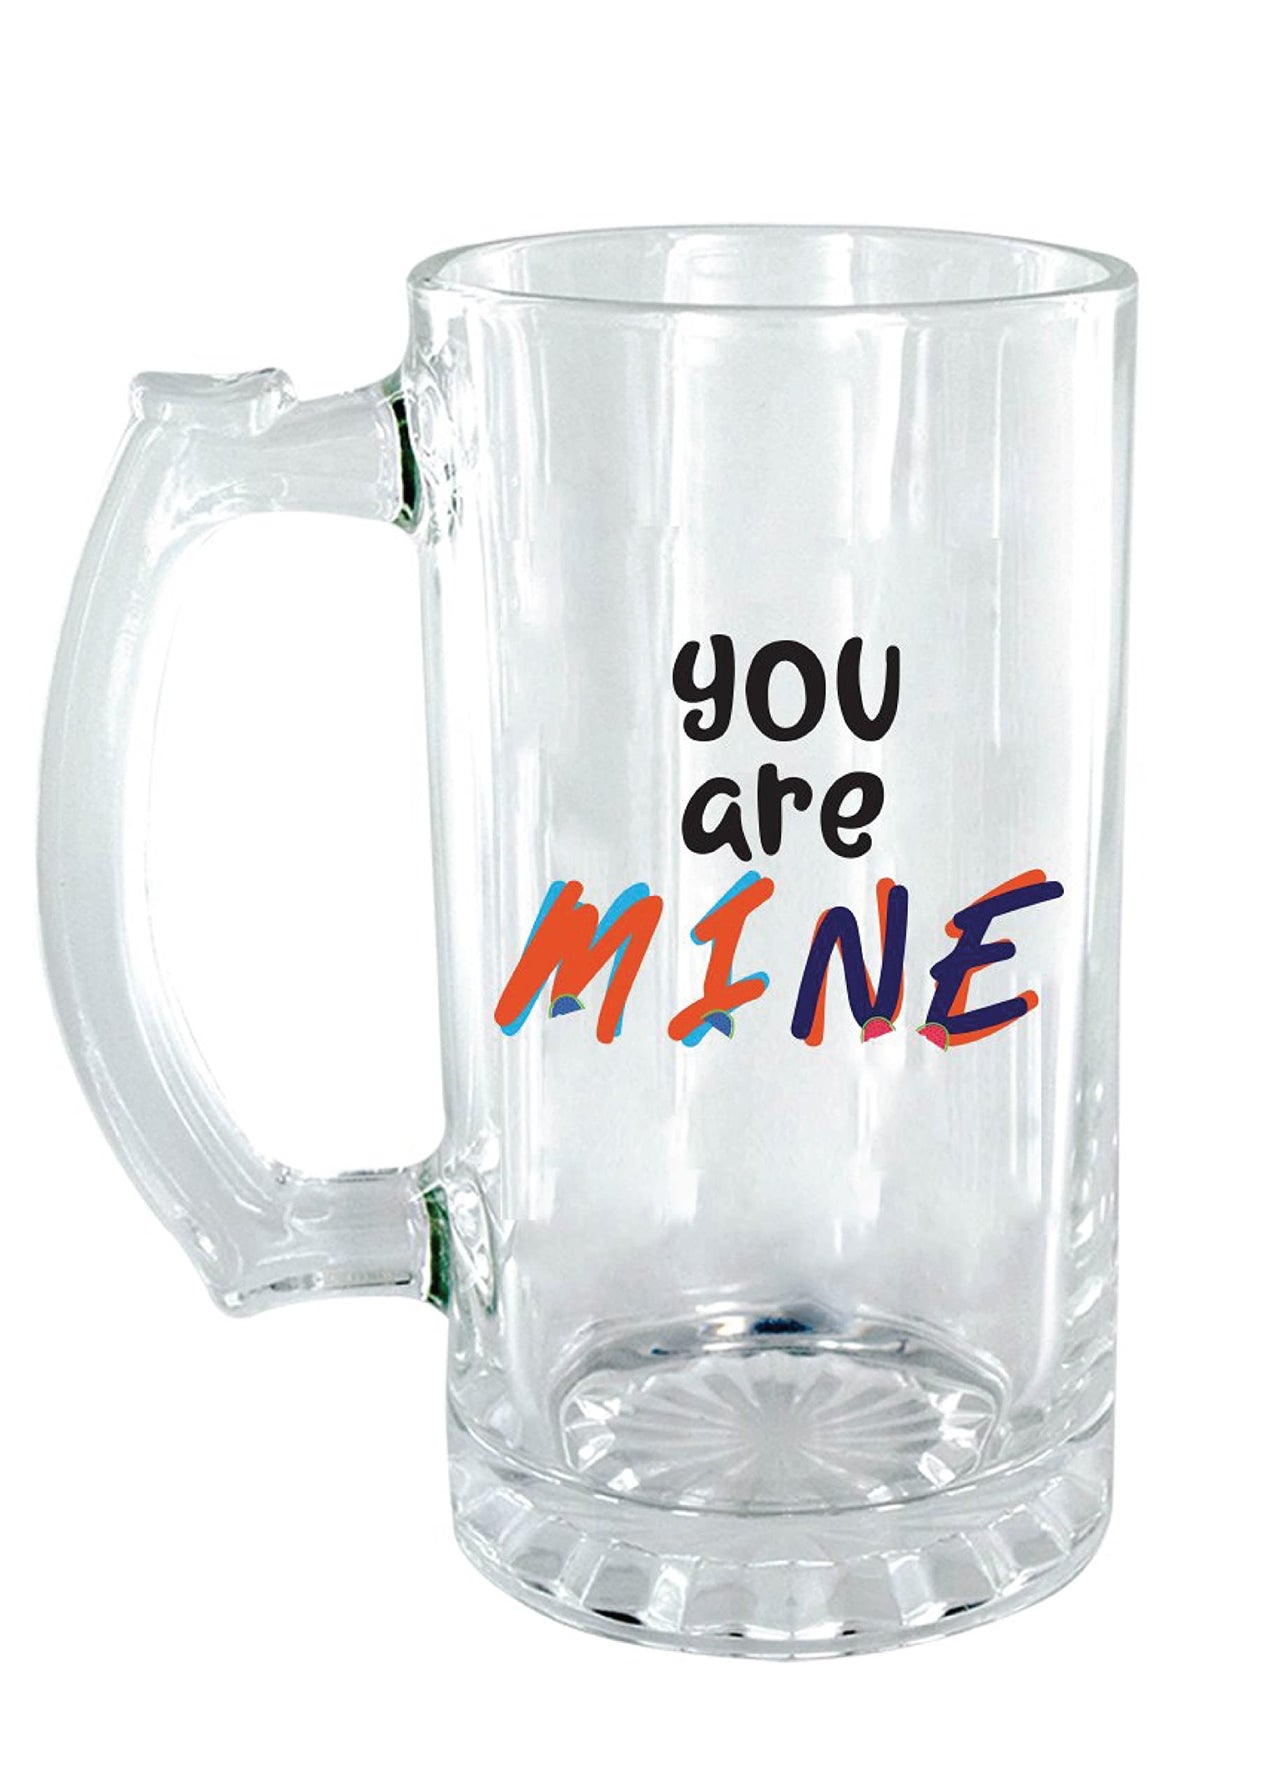 You're Mine Beer Mug 1 Piece, Clear, 500 ml -Transparent Glass Beer Mug